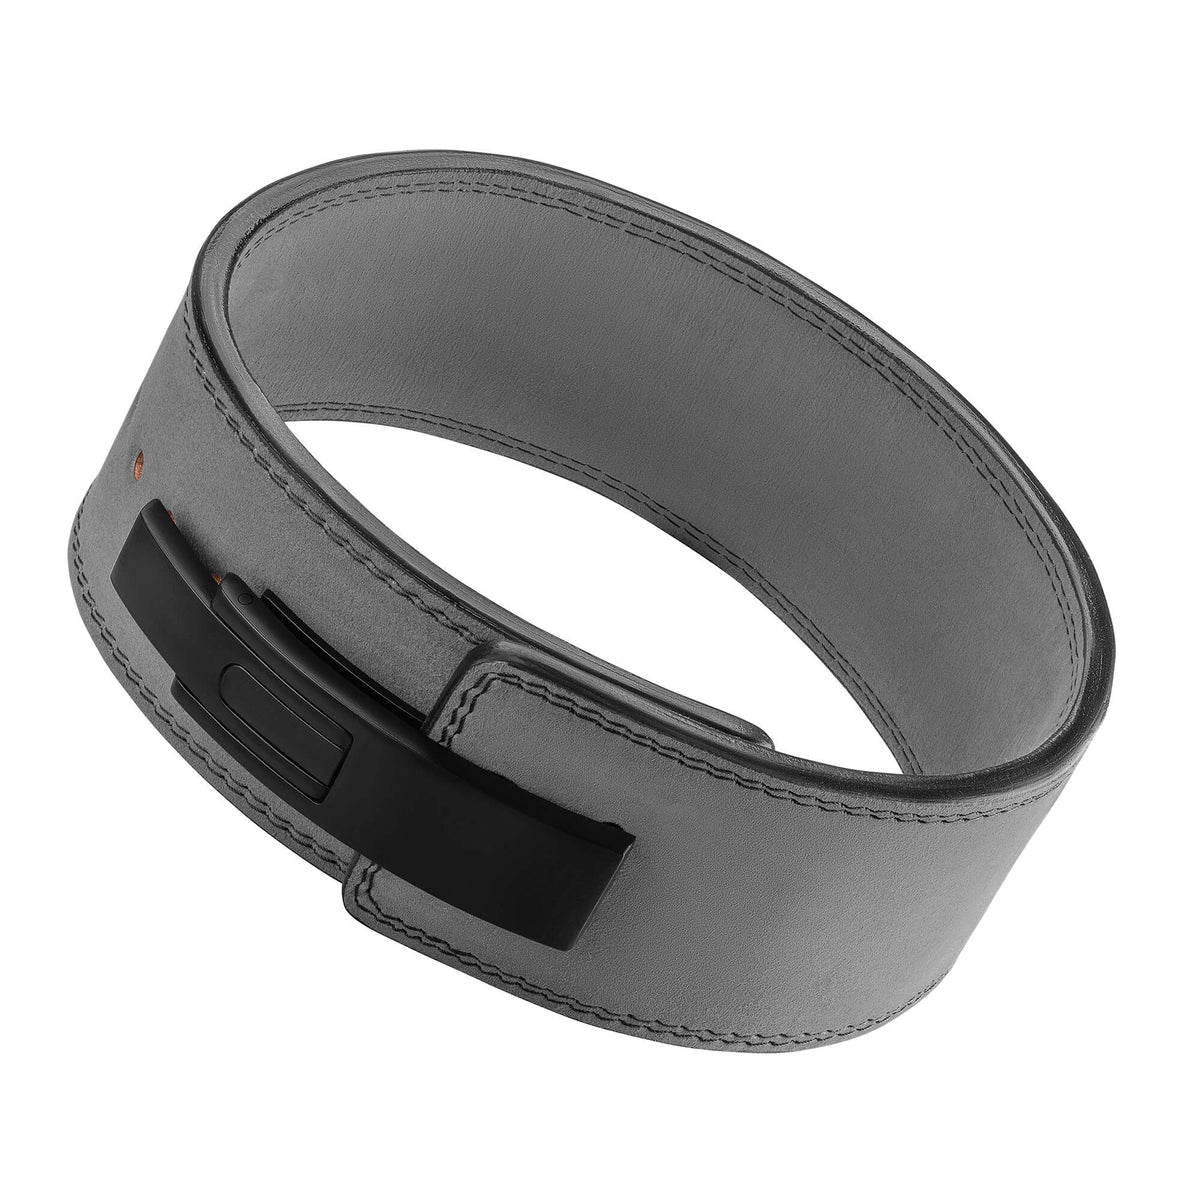 Gymreapers 10mm Lever Belt Black Medium Size Adjustable Weight Lifting Belt  Only